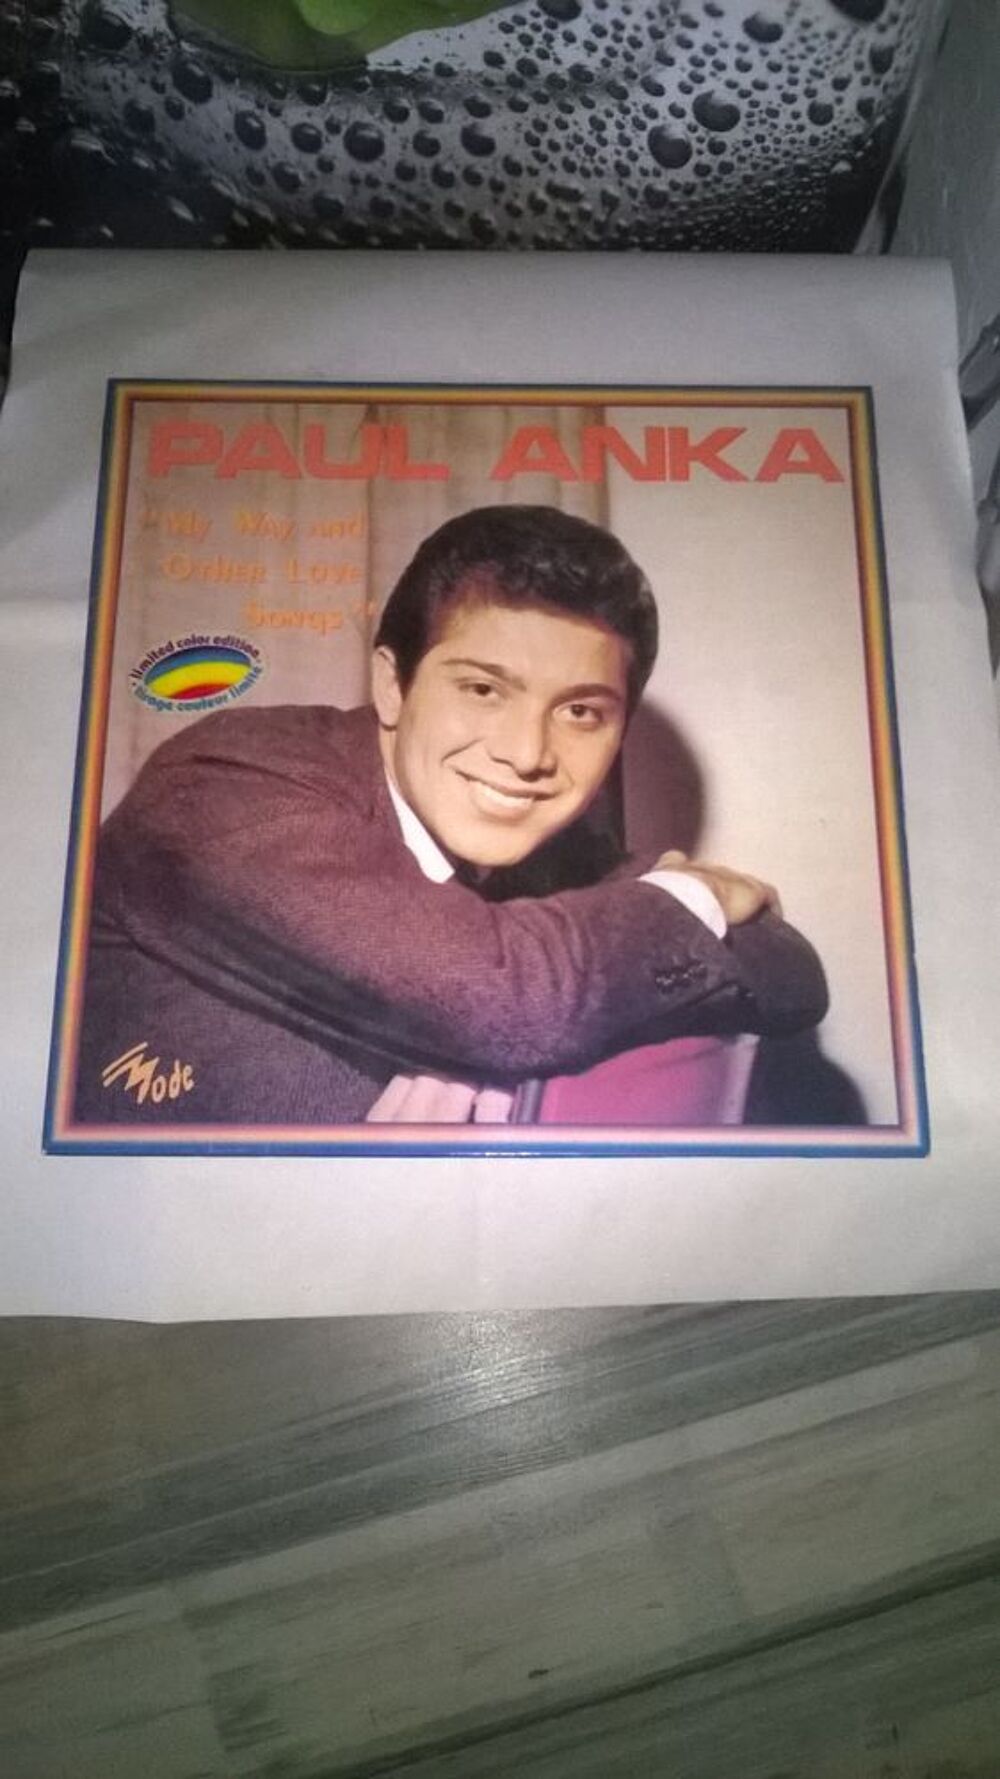 Vinyle Anka Paul
My Way
1974
Excellent etat
Collector
Ti CD et vinyles